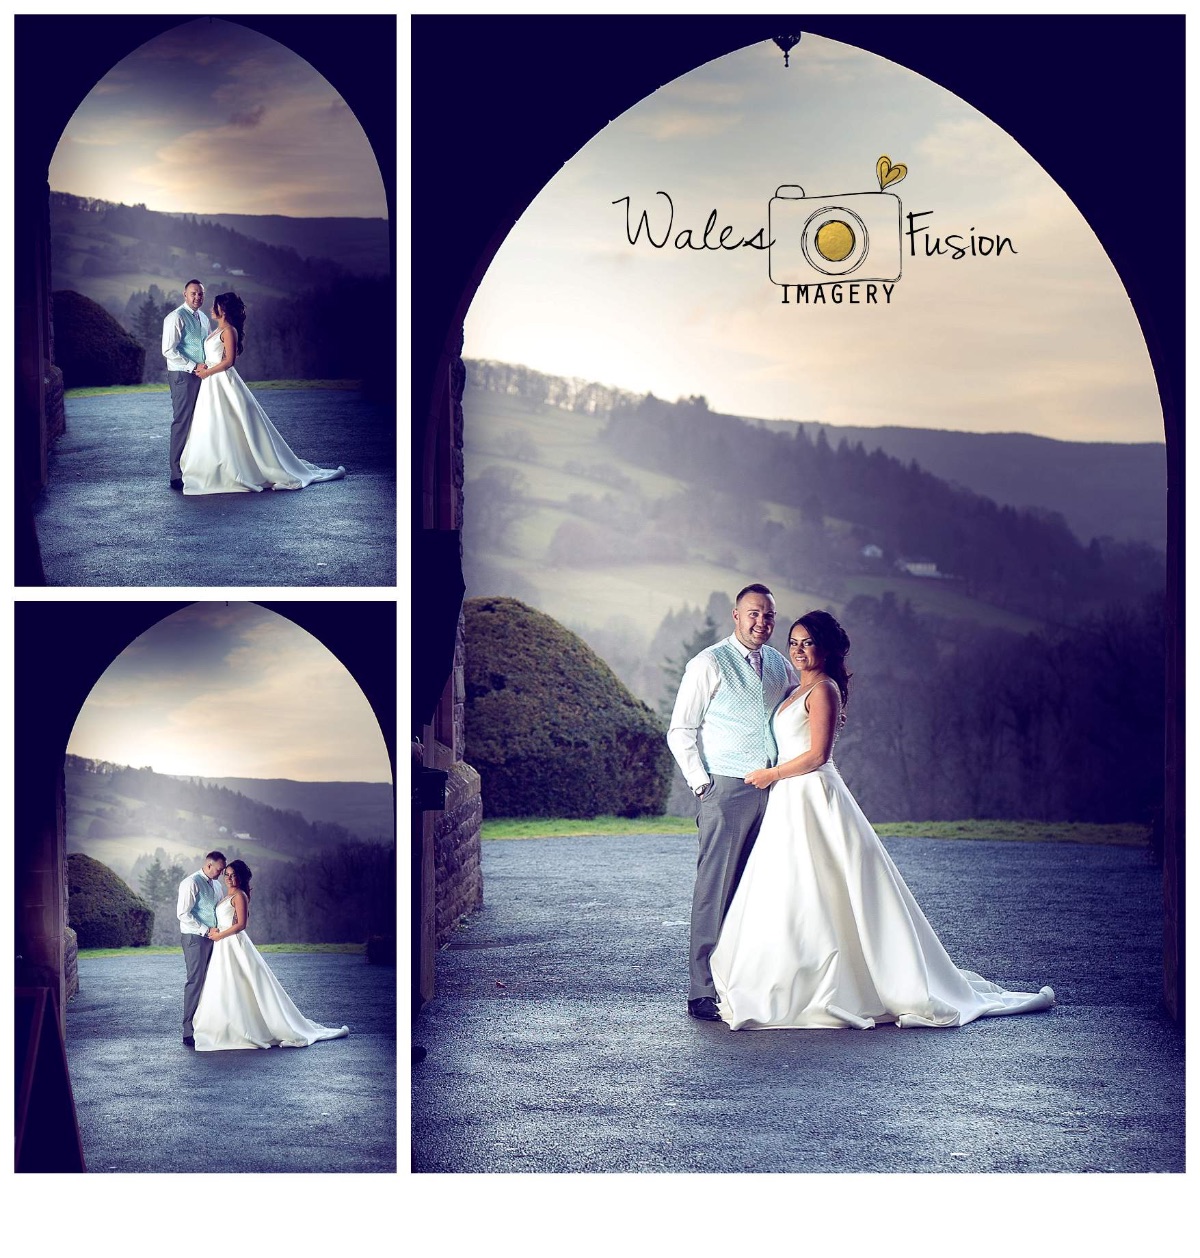 Combo photo/Video. Wedding Fusion Imagery.-Image-97